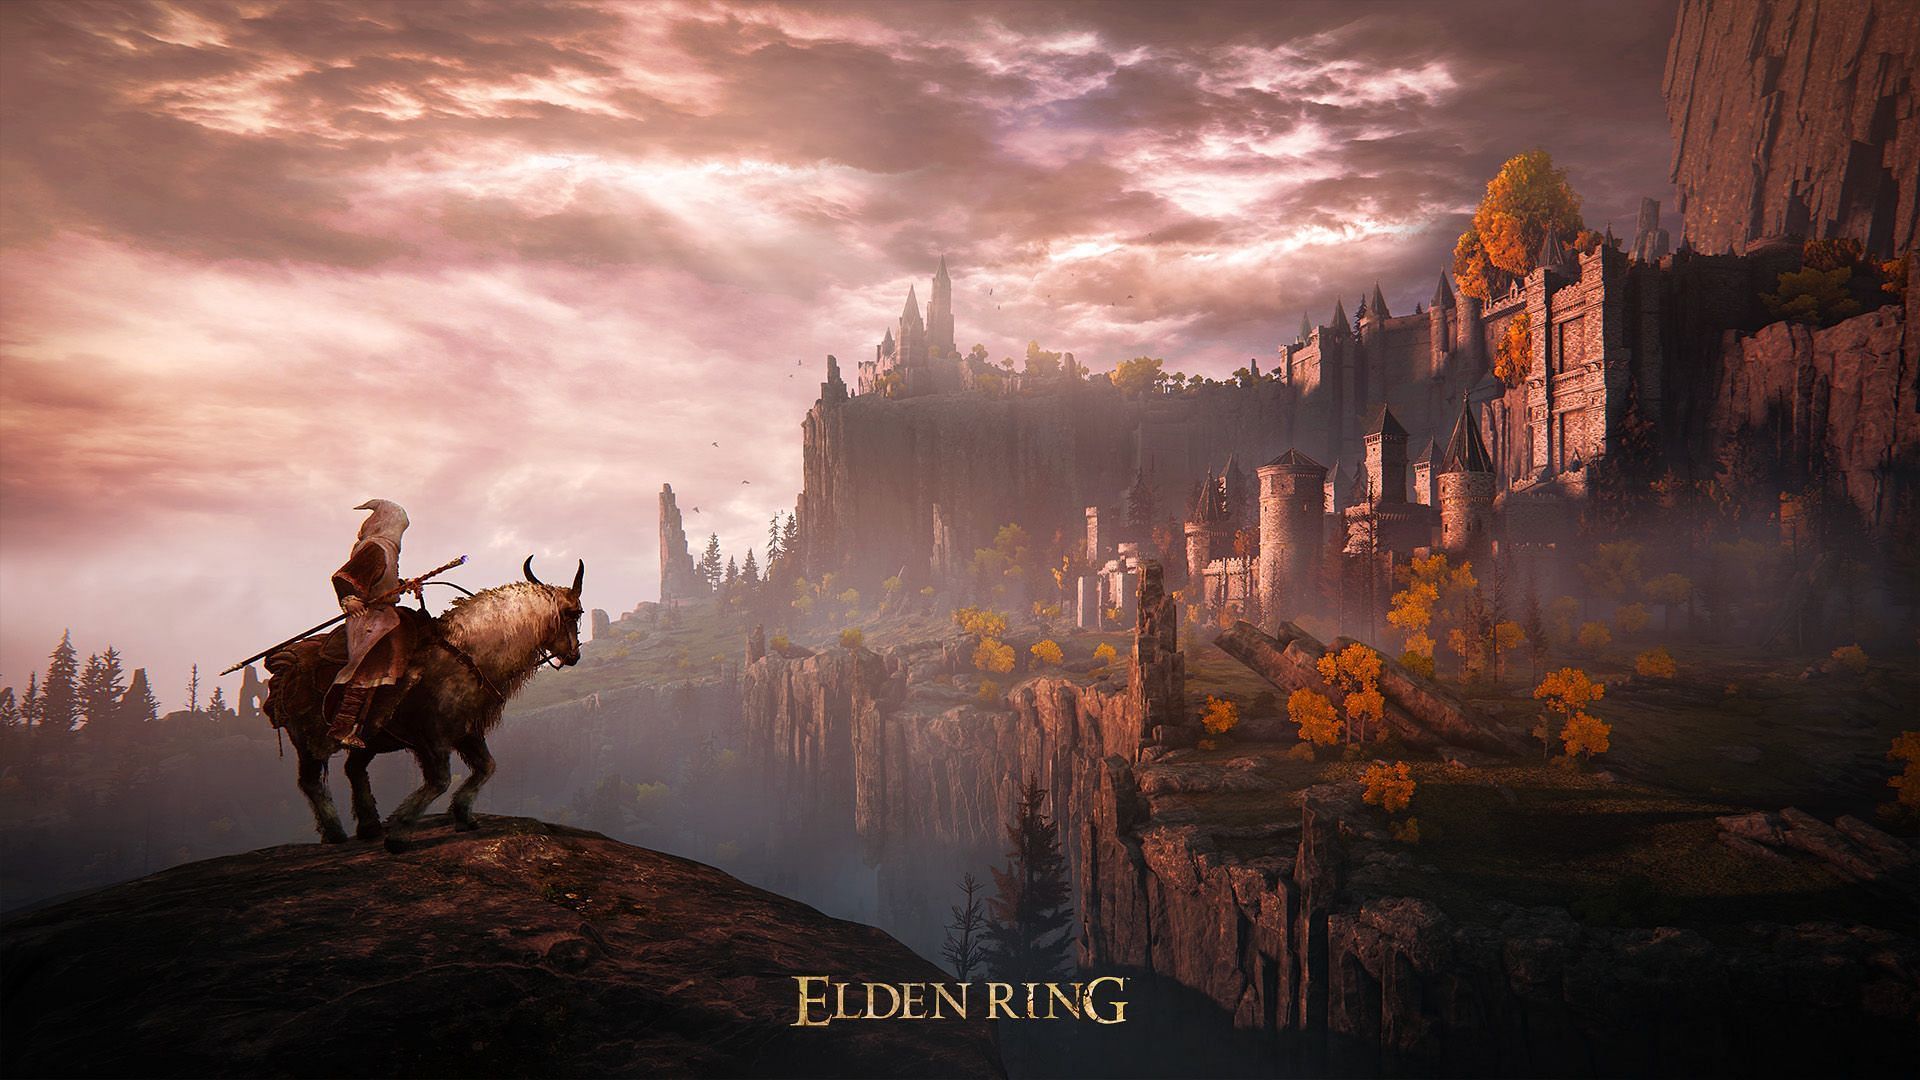 The world of Elden Ring (image via Bandai Namco)